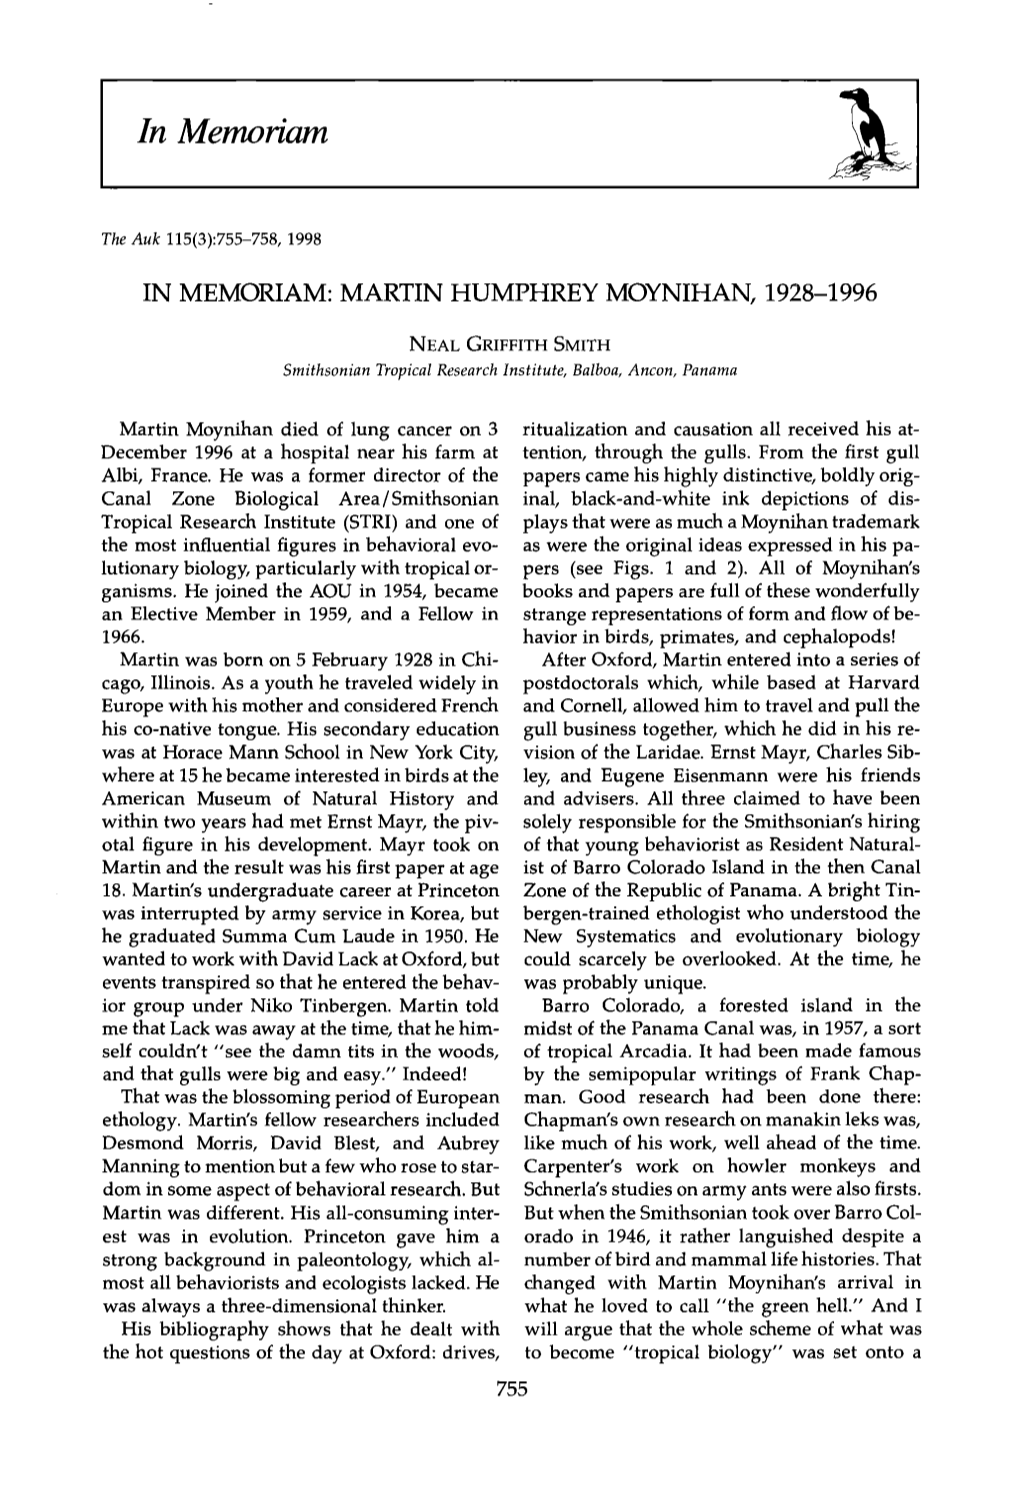 In Memoriam: Martin Humphrey Moynihan, 1928-1996